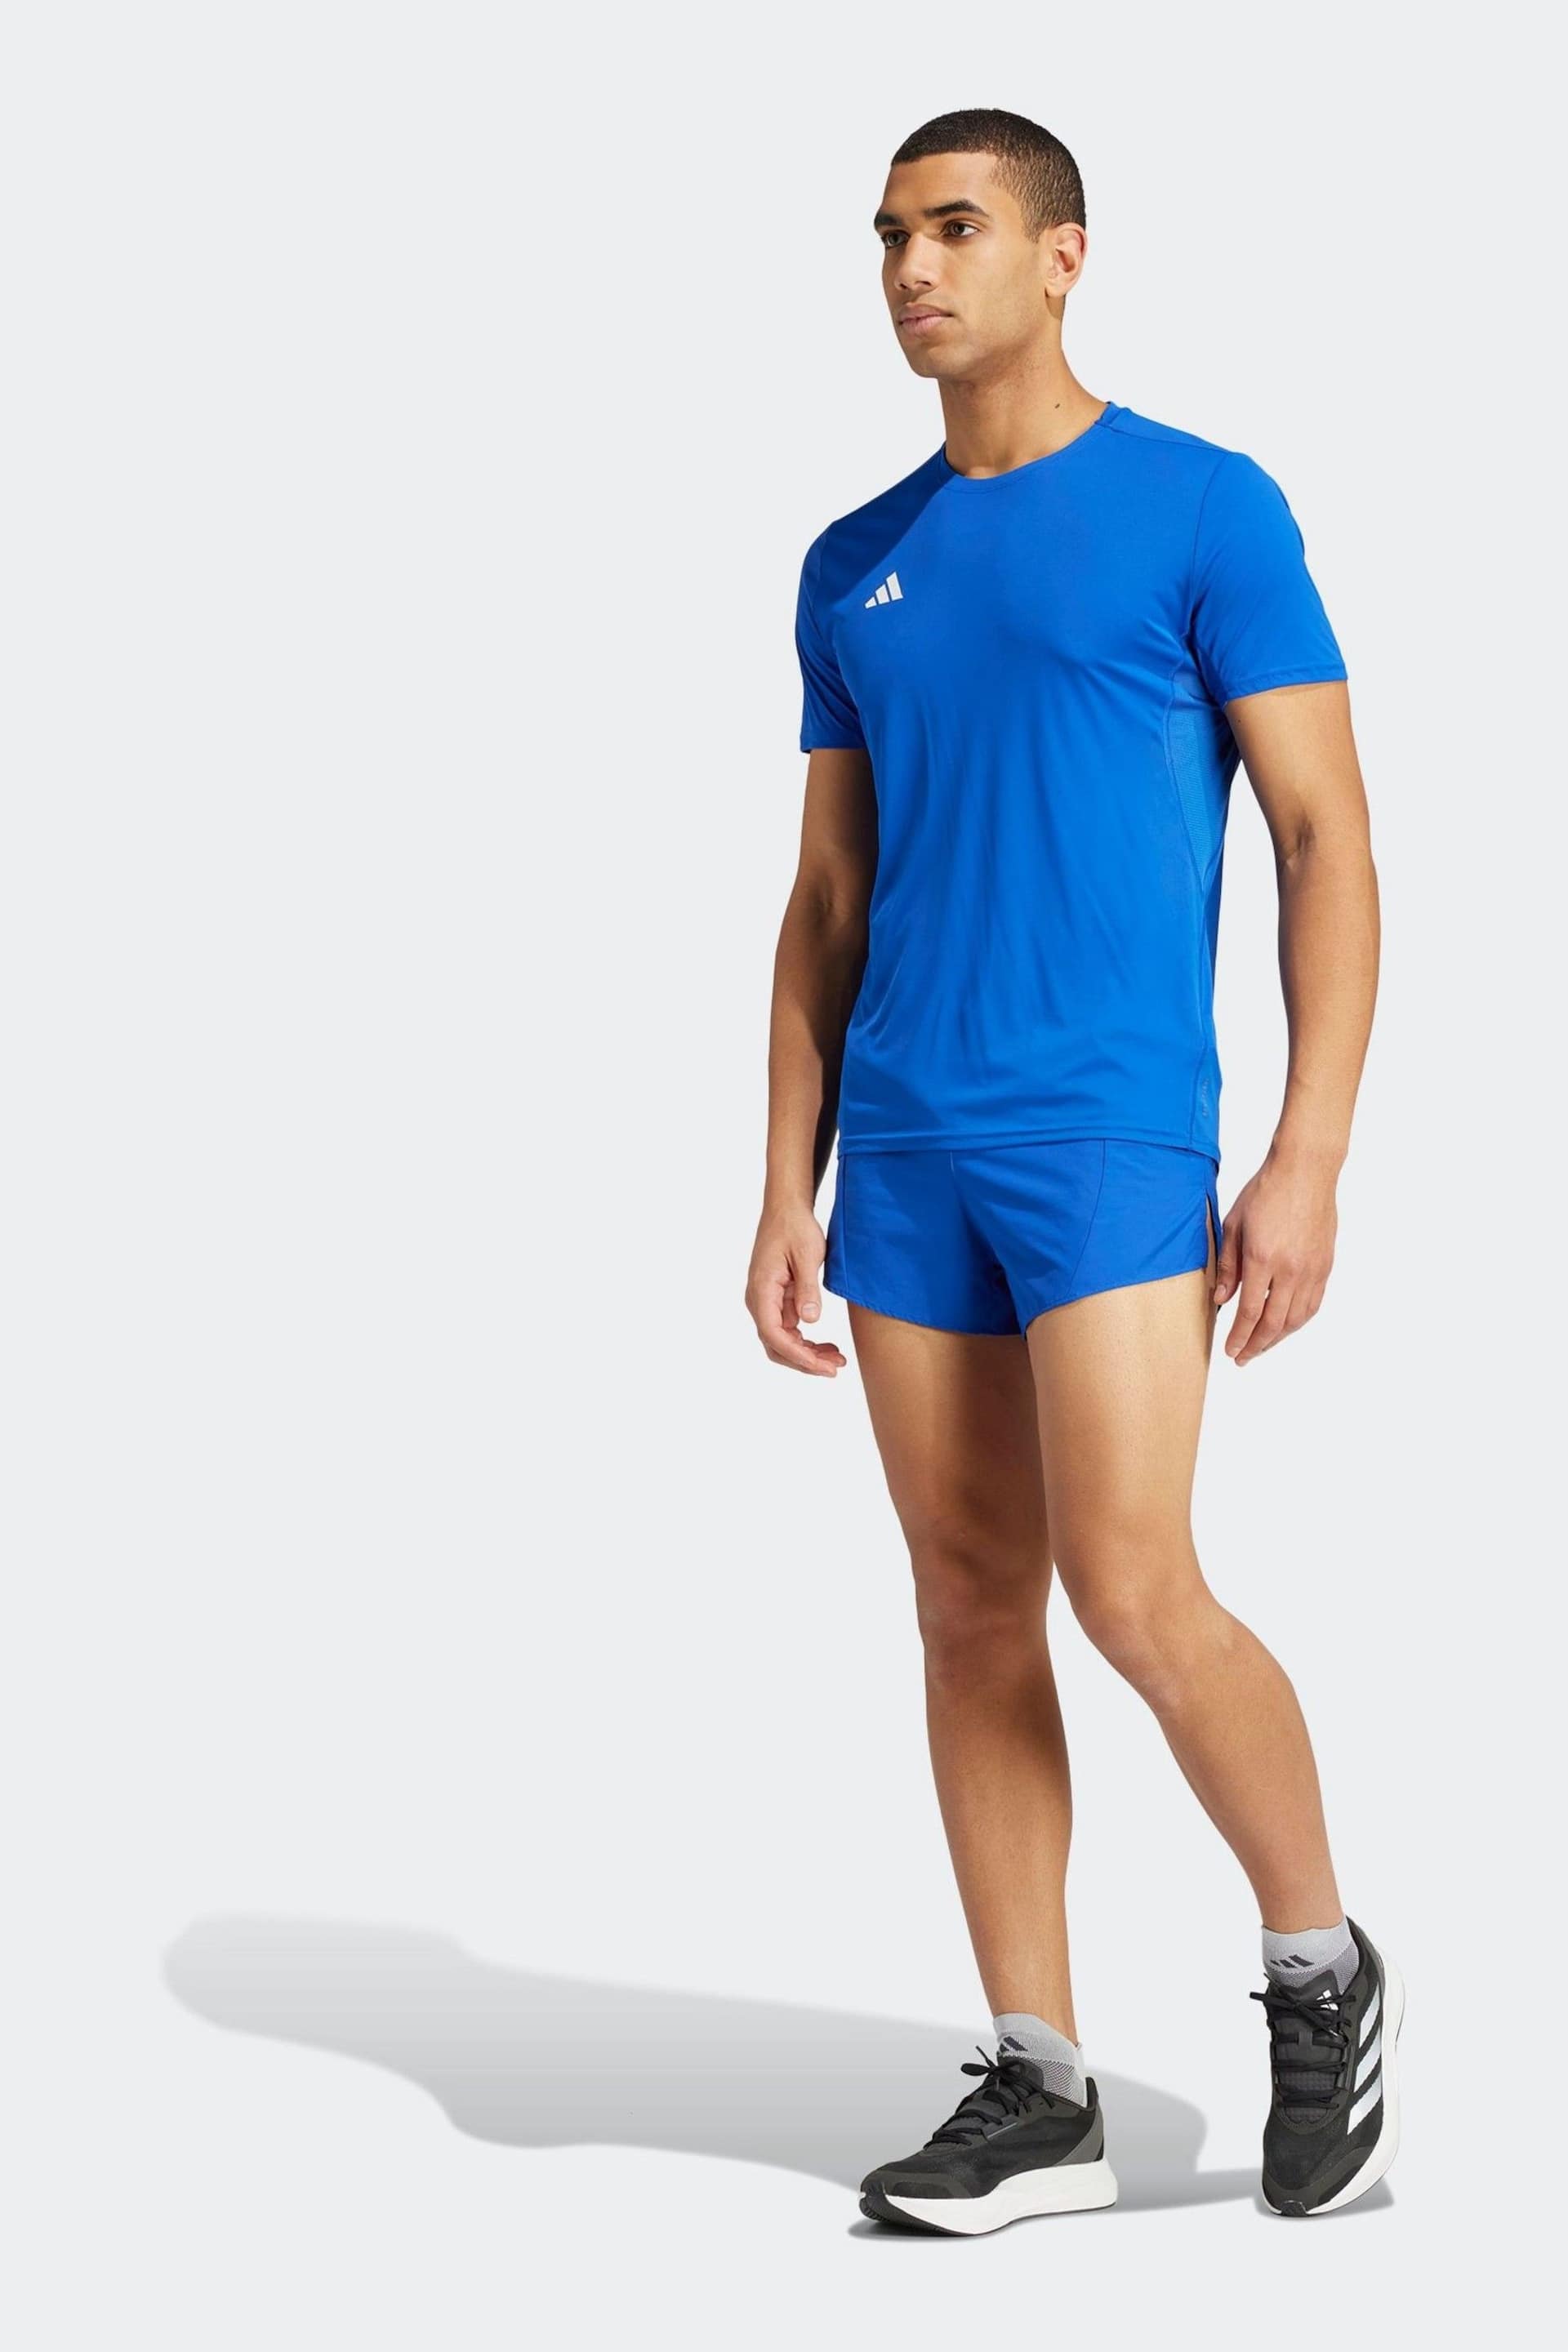 adidas Bright Blue Adizero Essentials Running T-Shirt - Image 3 of 17